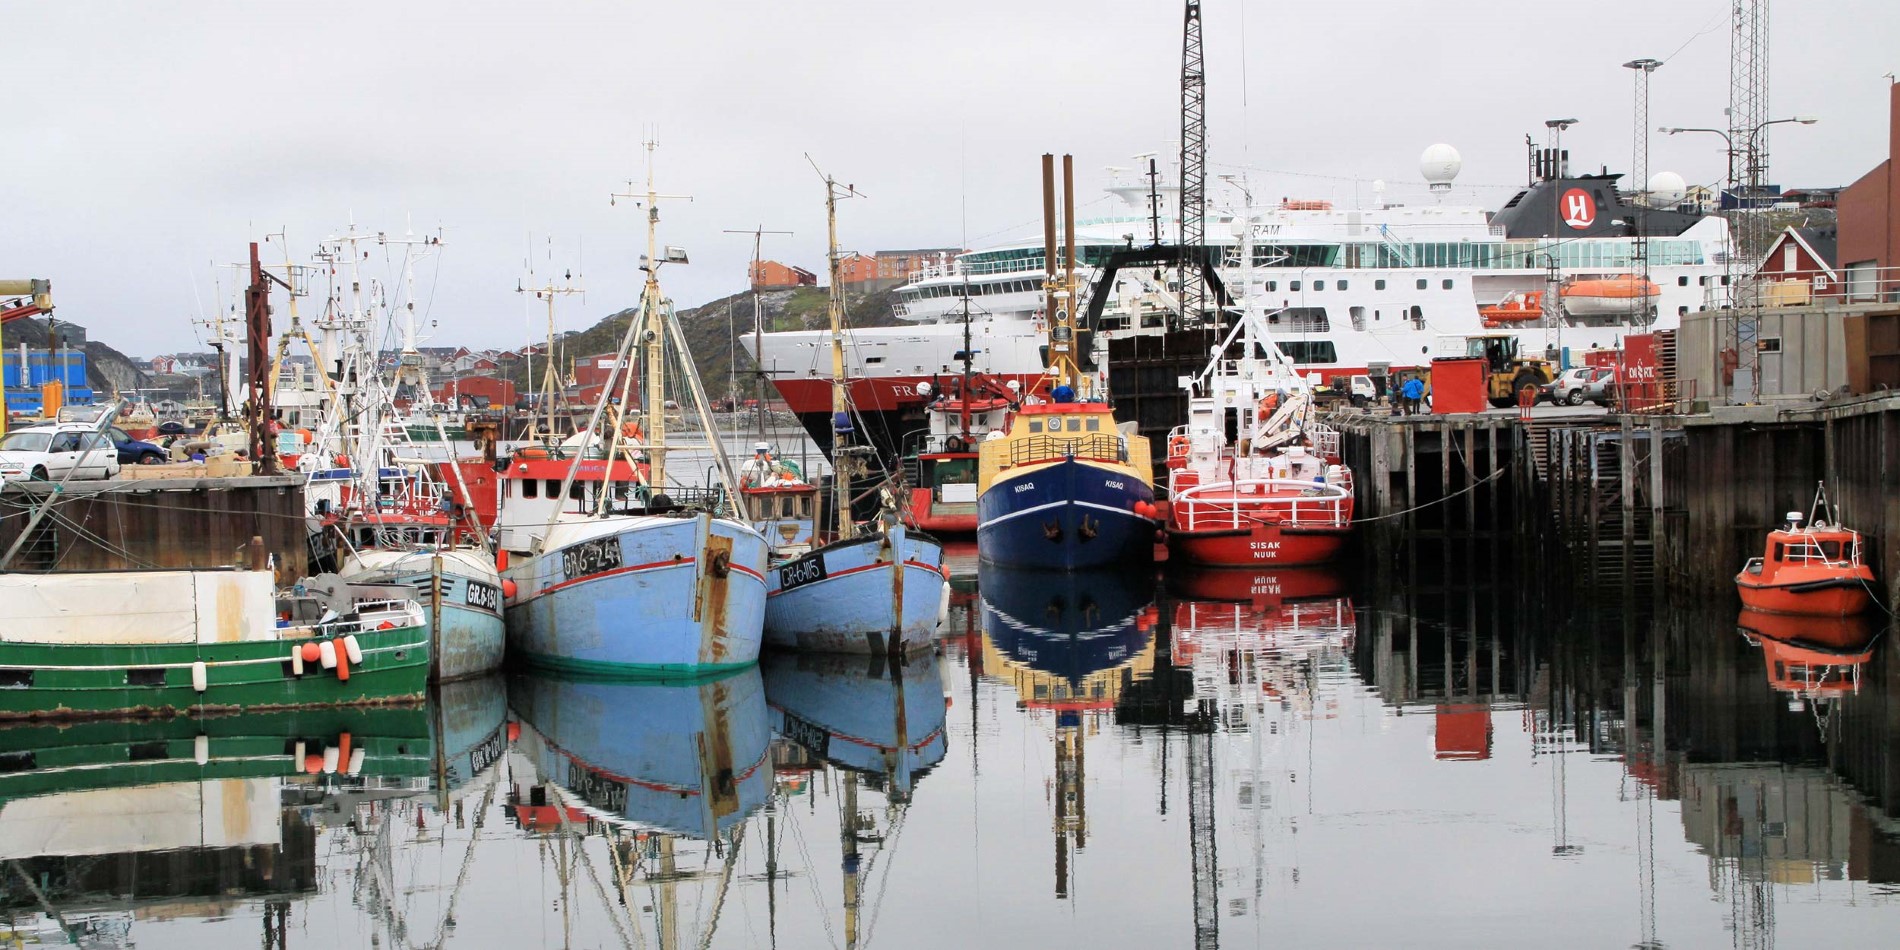 Hurtigruten in Nuuk harbour with fishing boats